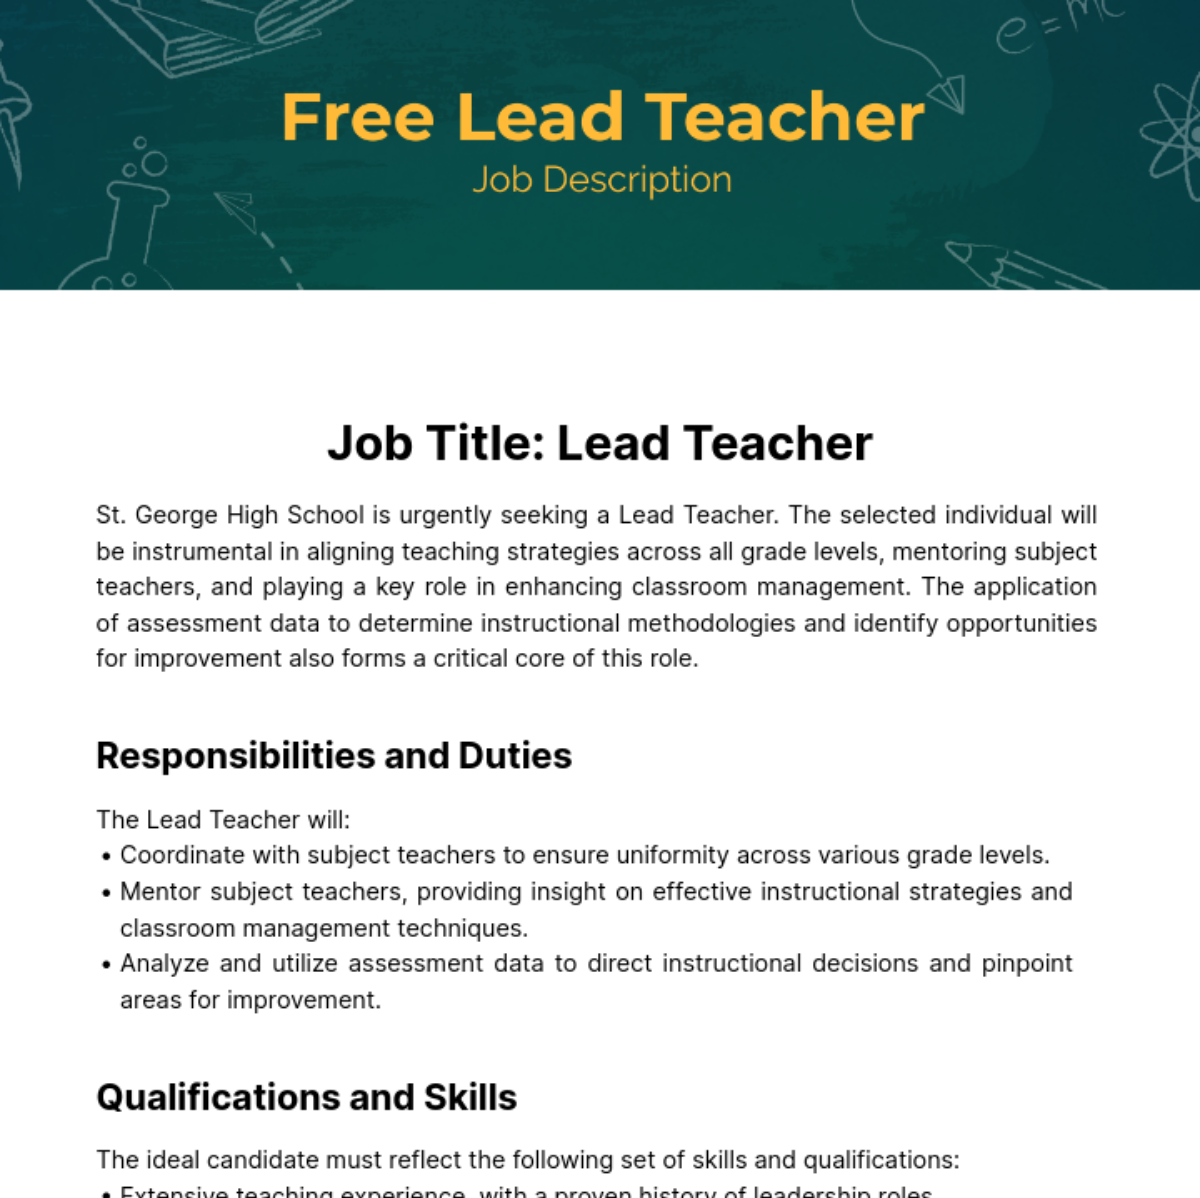 Free Lead Teacher Job Description Template